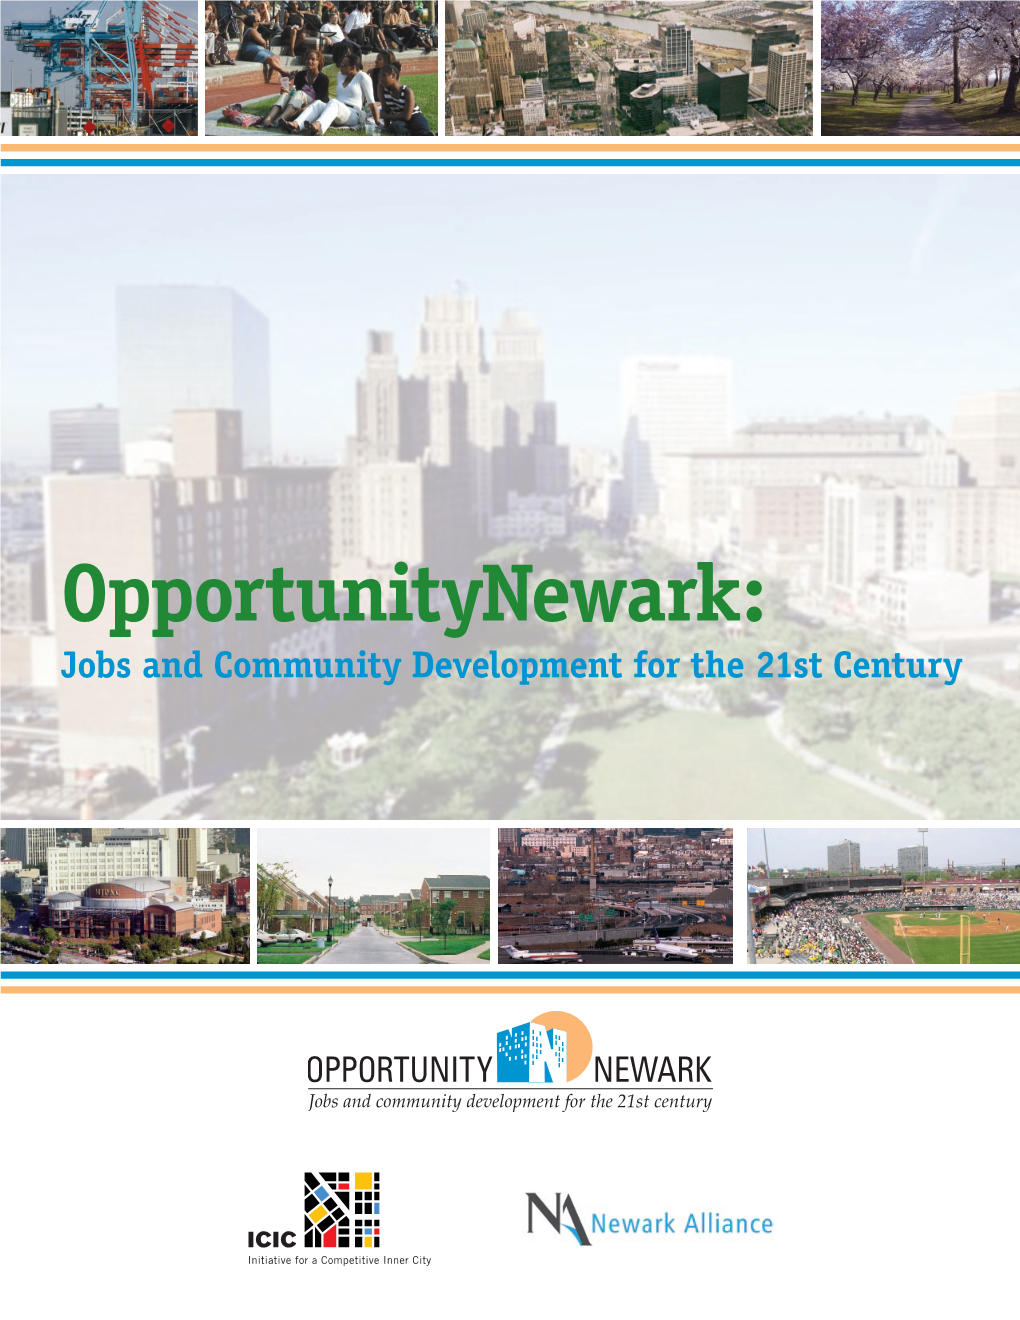 Opportunitynewark: Jobs and Community Development for the 21St Century